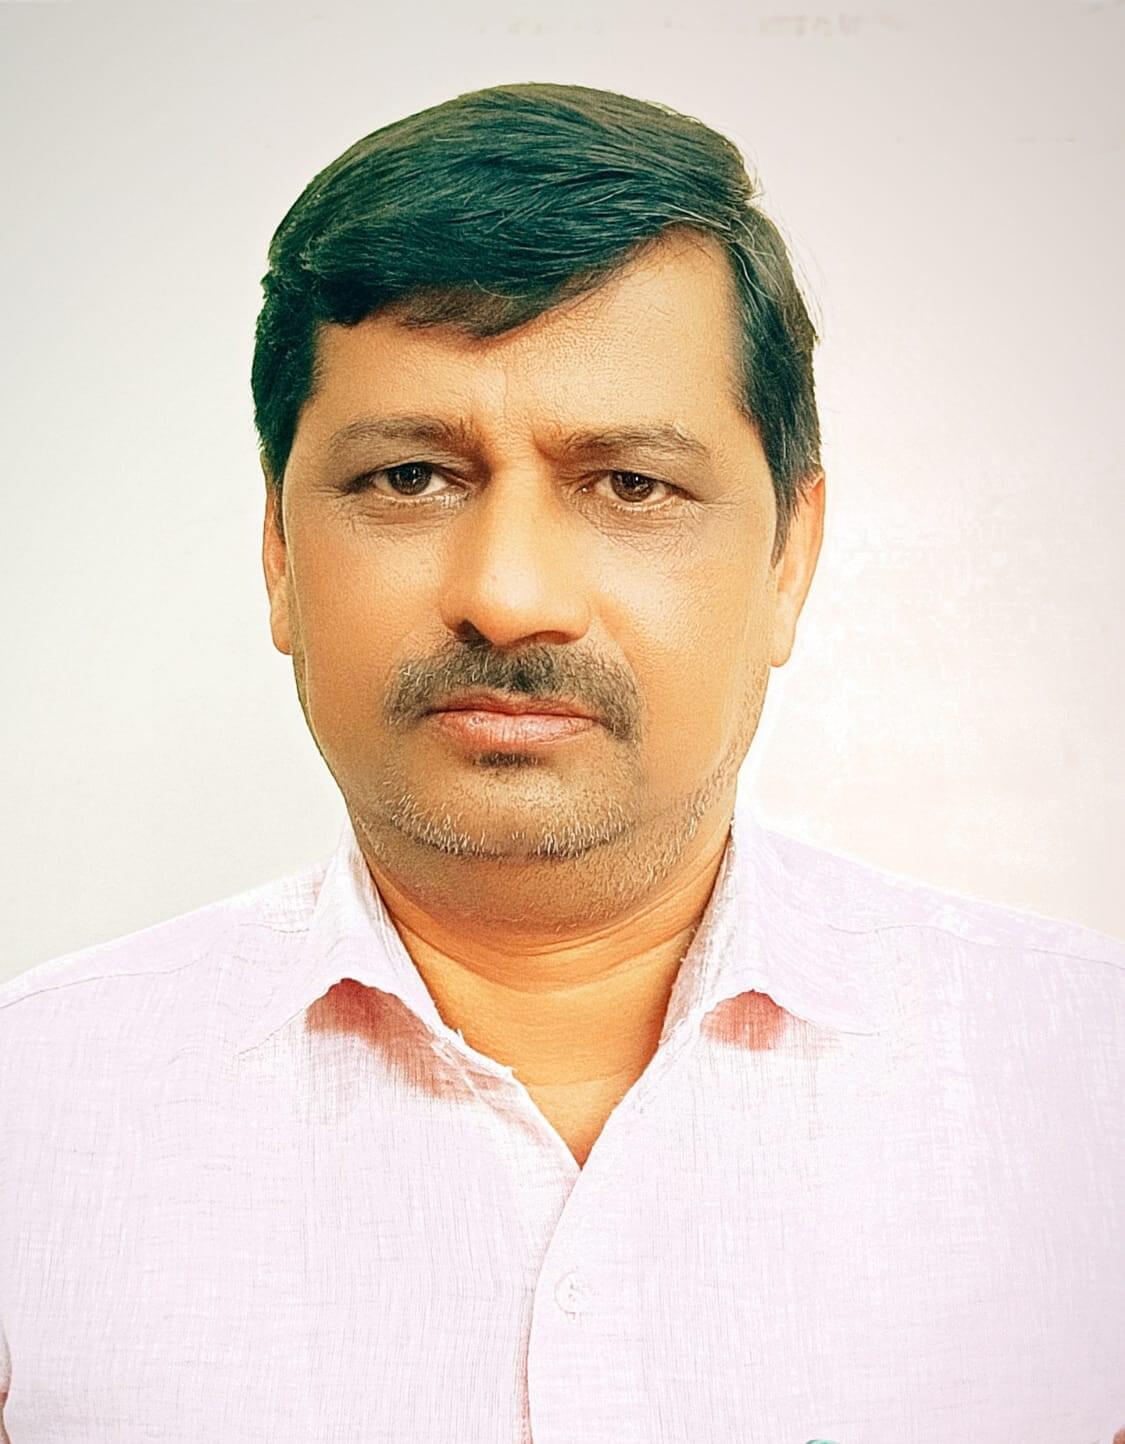 Arvind Kumar Singh